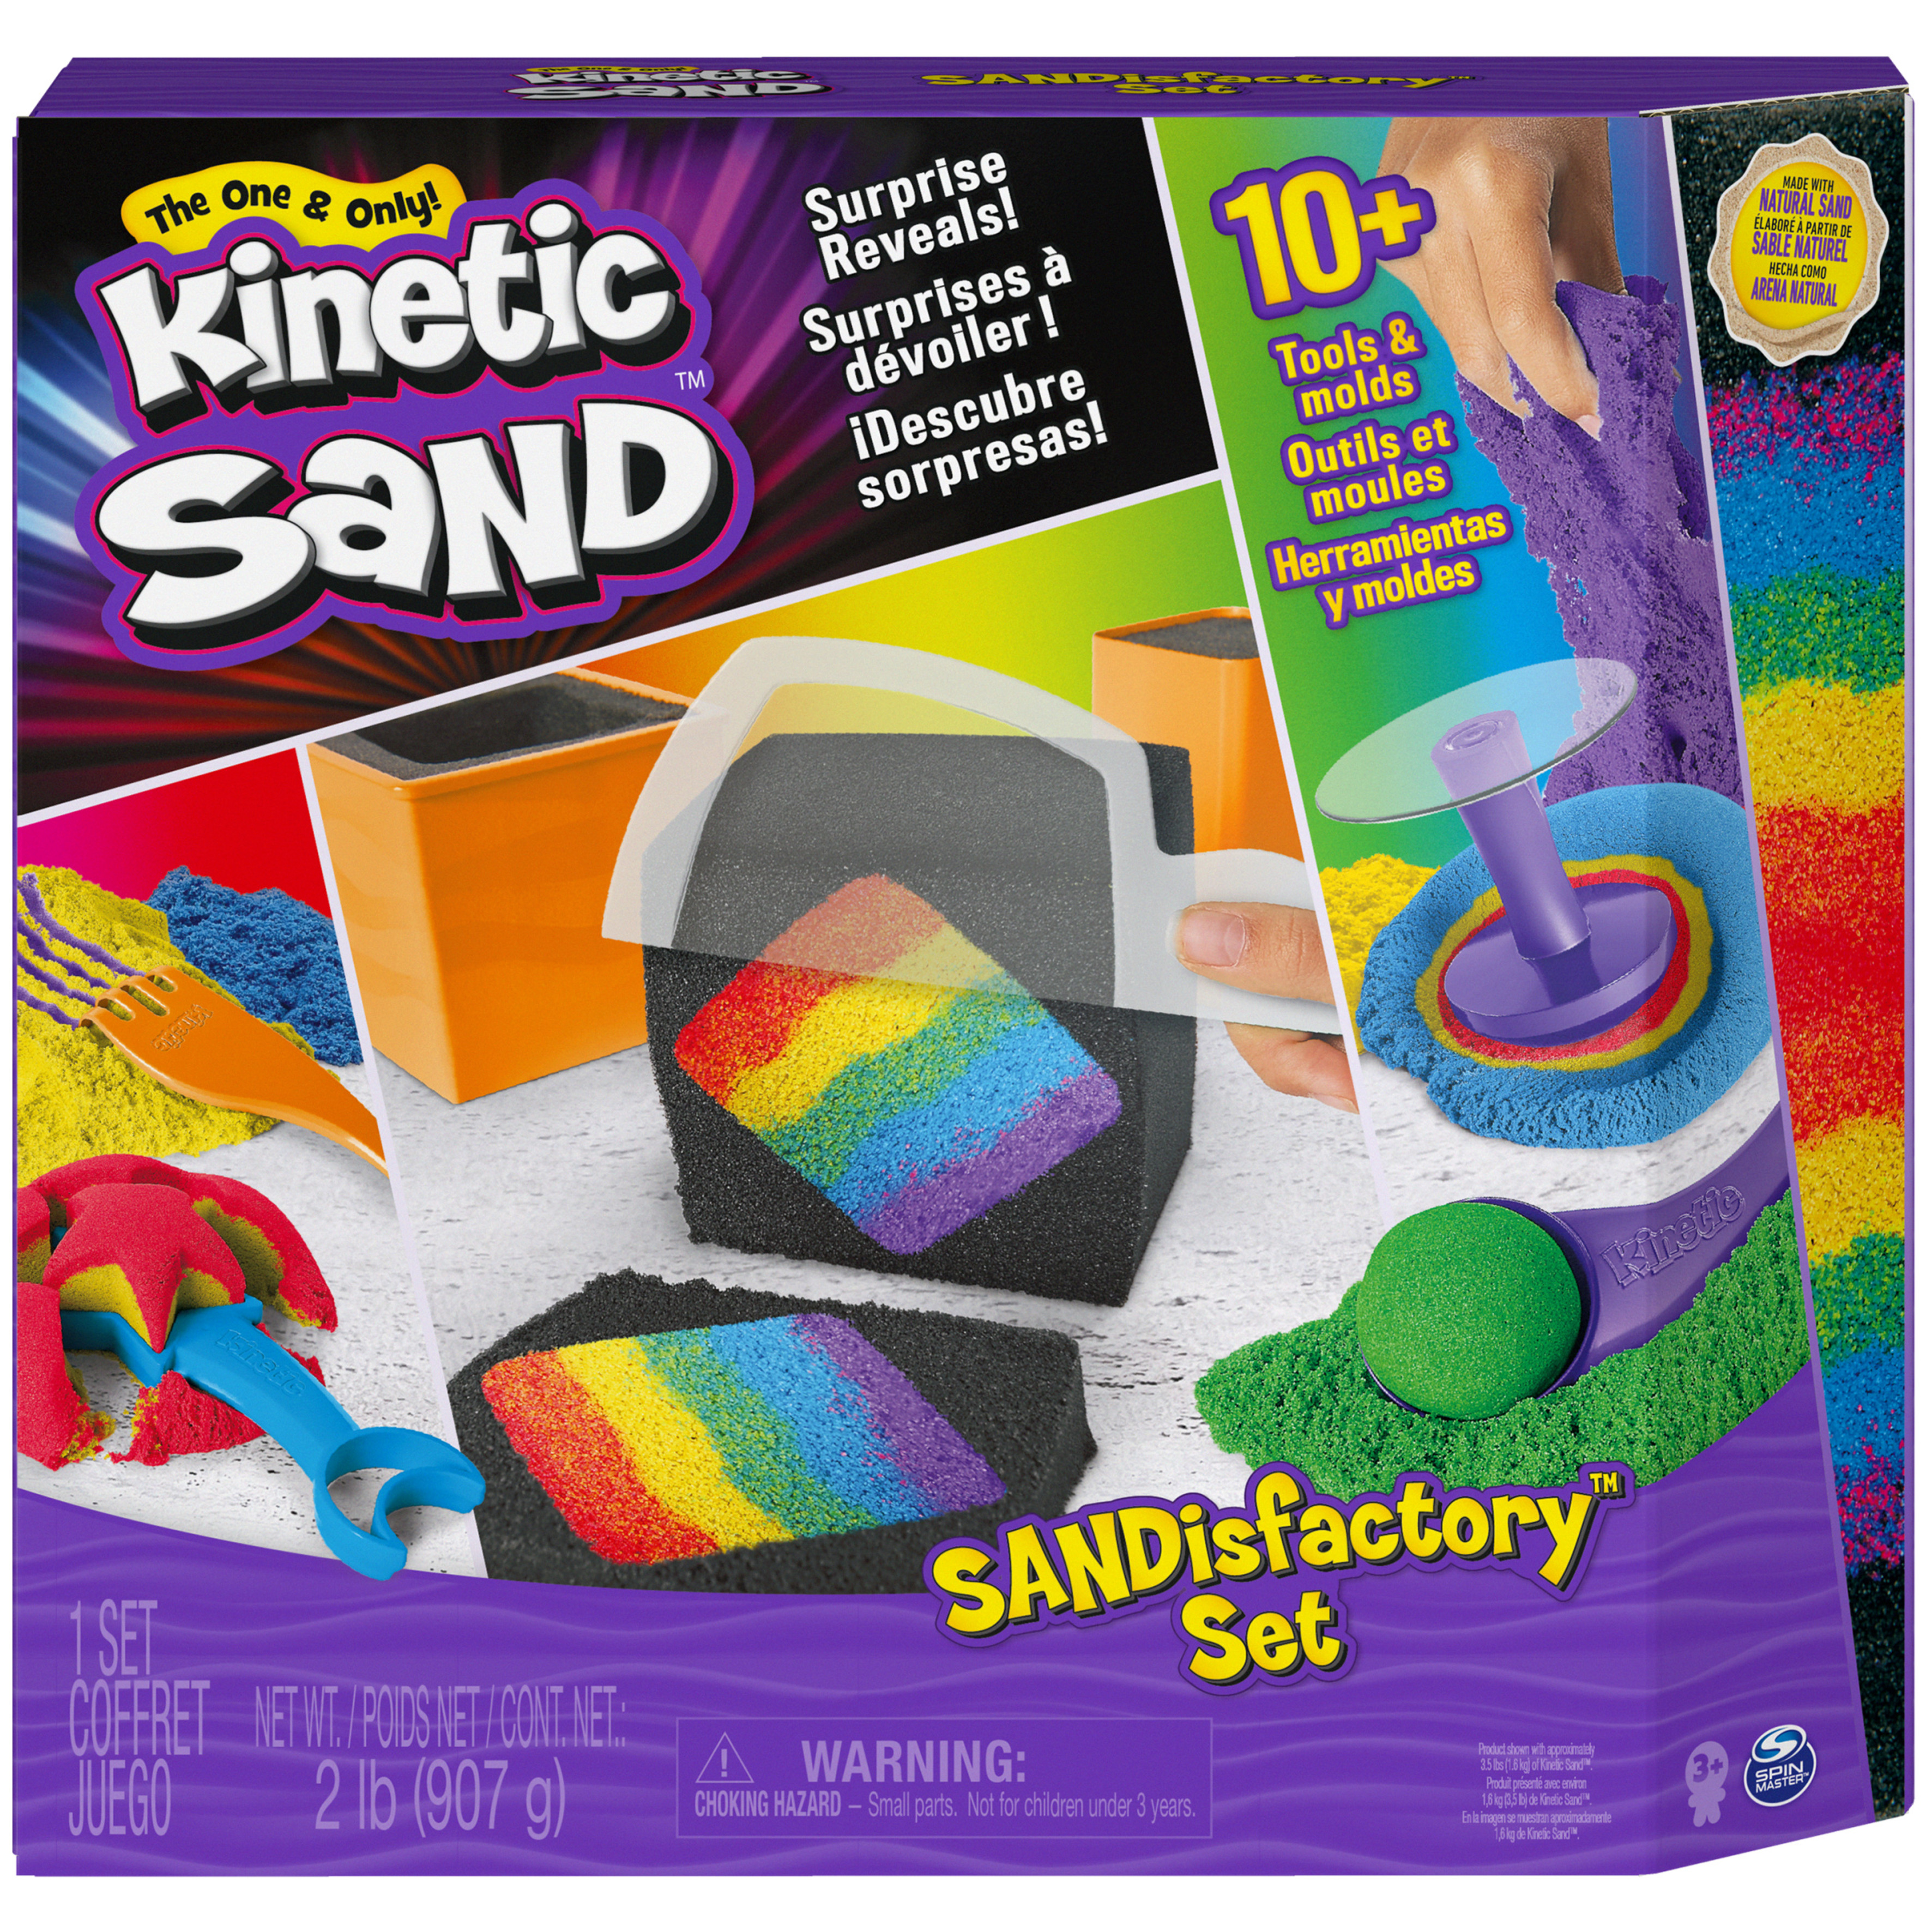 Kinetic Sand Sandisfactory Set with 2lbs of Colored Kinetic Sand - image 1 of 12